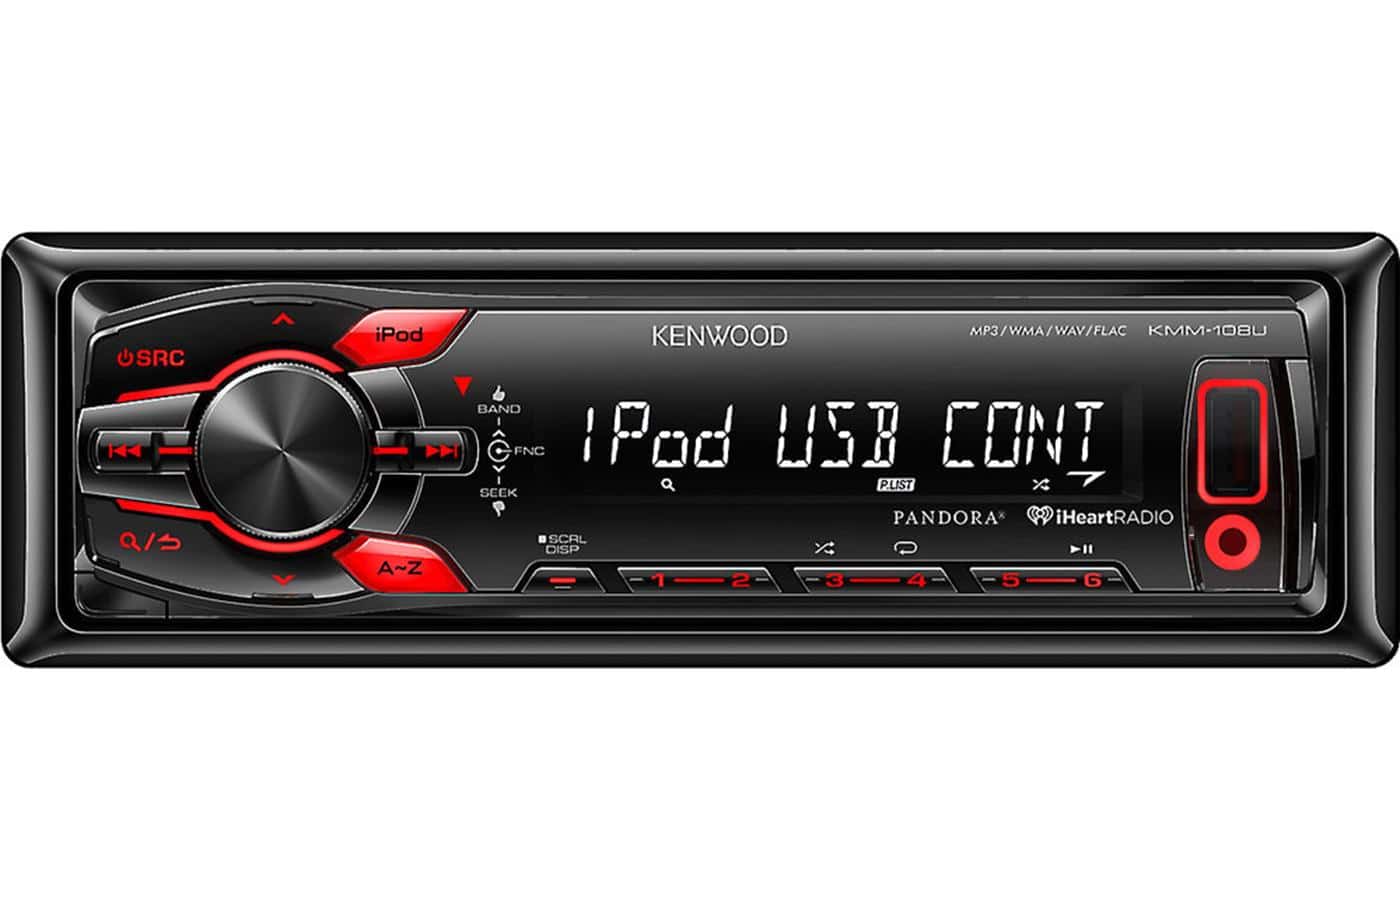 KMM108 USB car radio